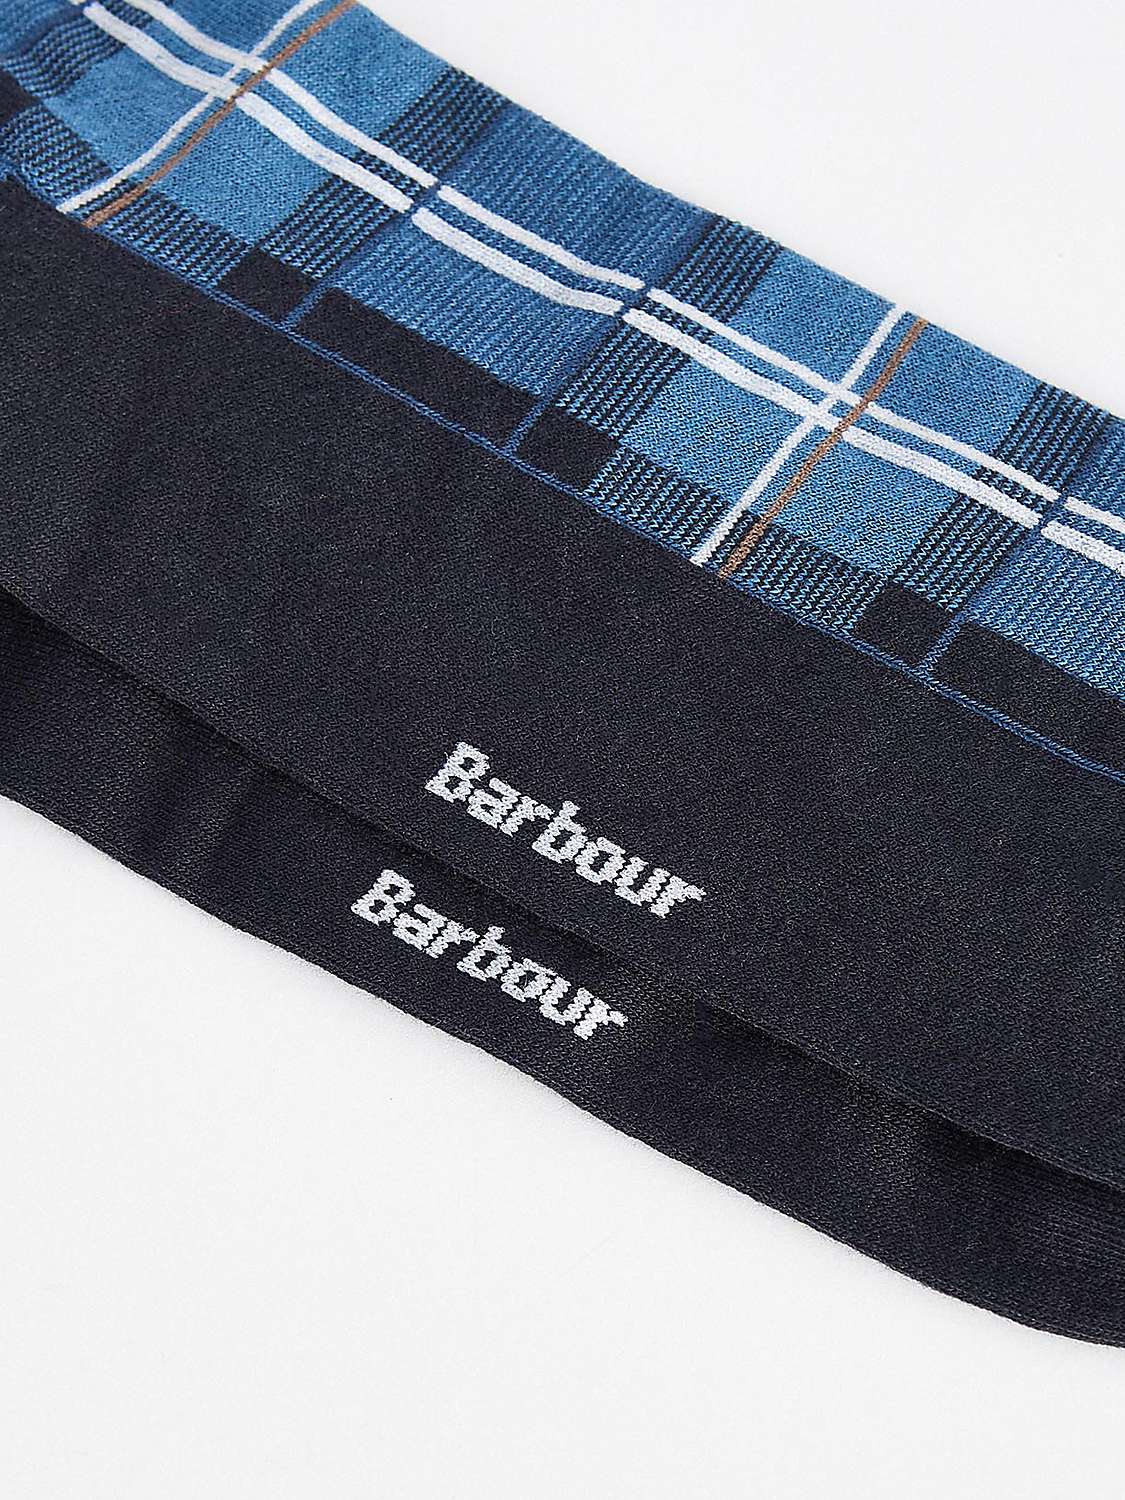 Buy Barbour Blyth Tartan Socks, Berwick Blue Online at johnlewis.com